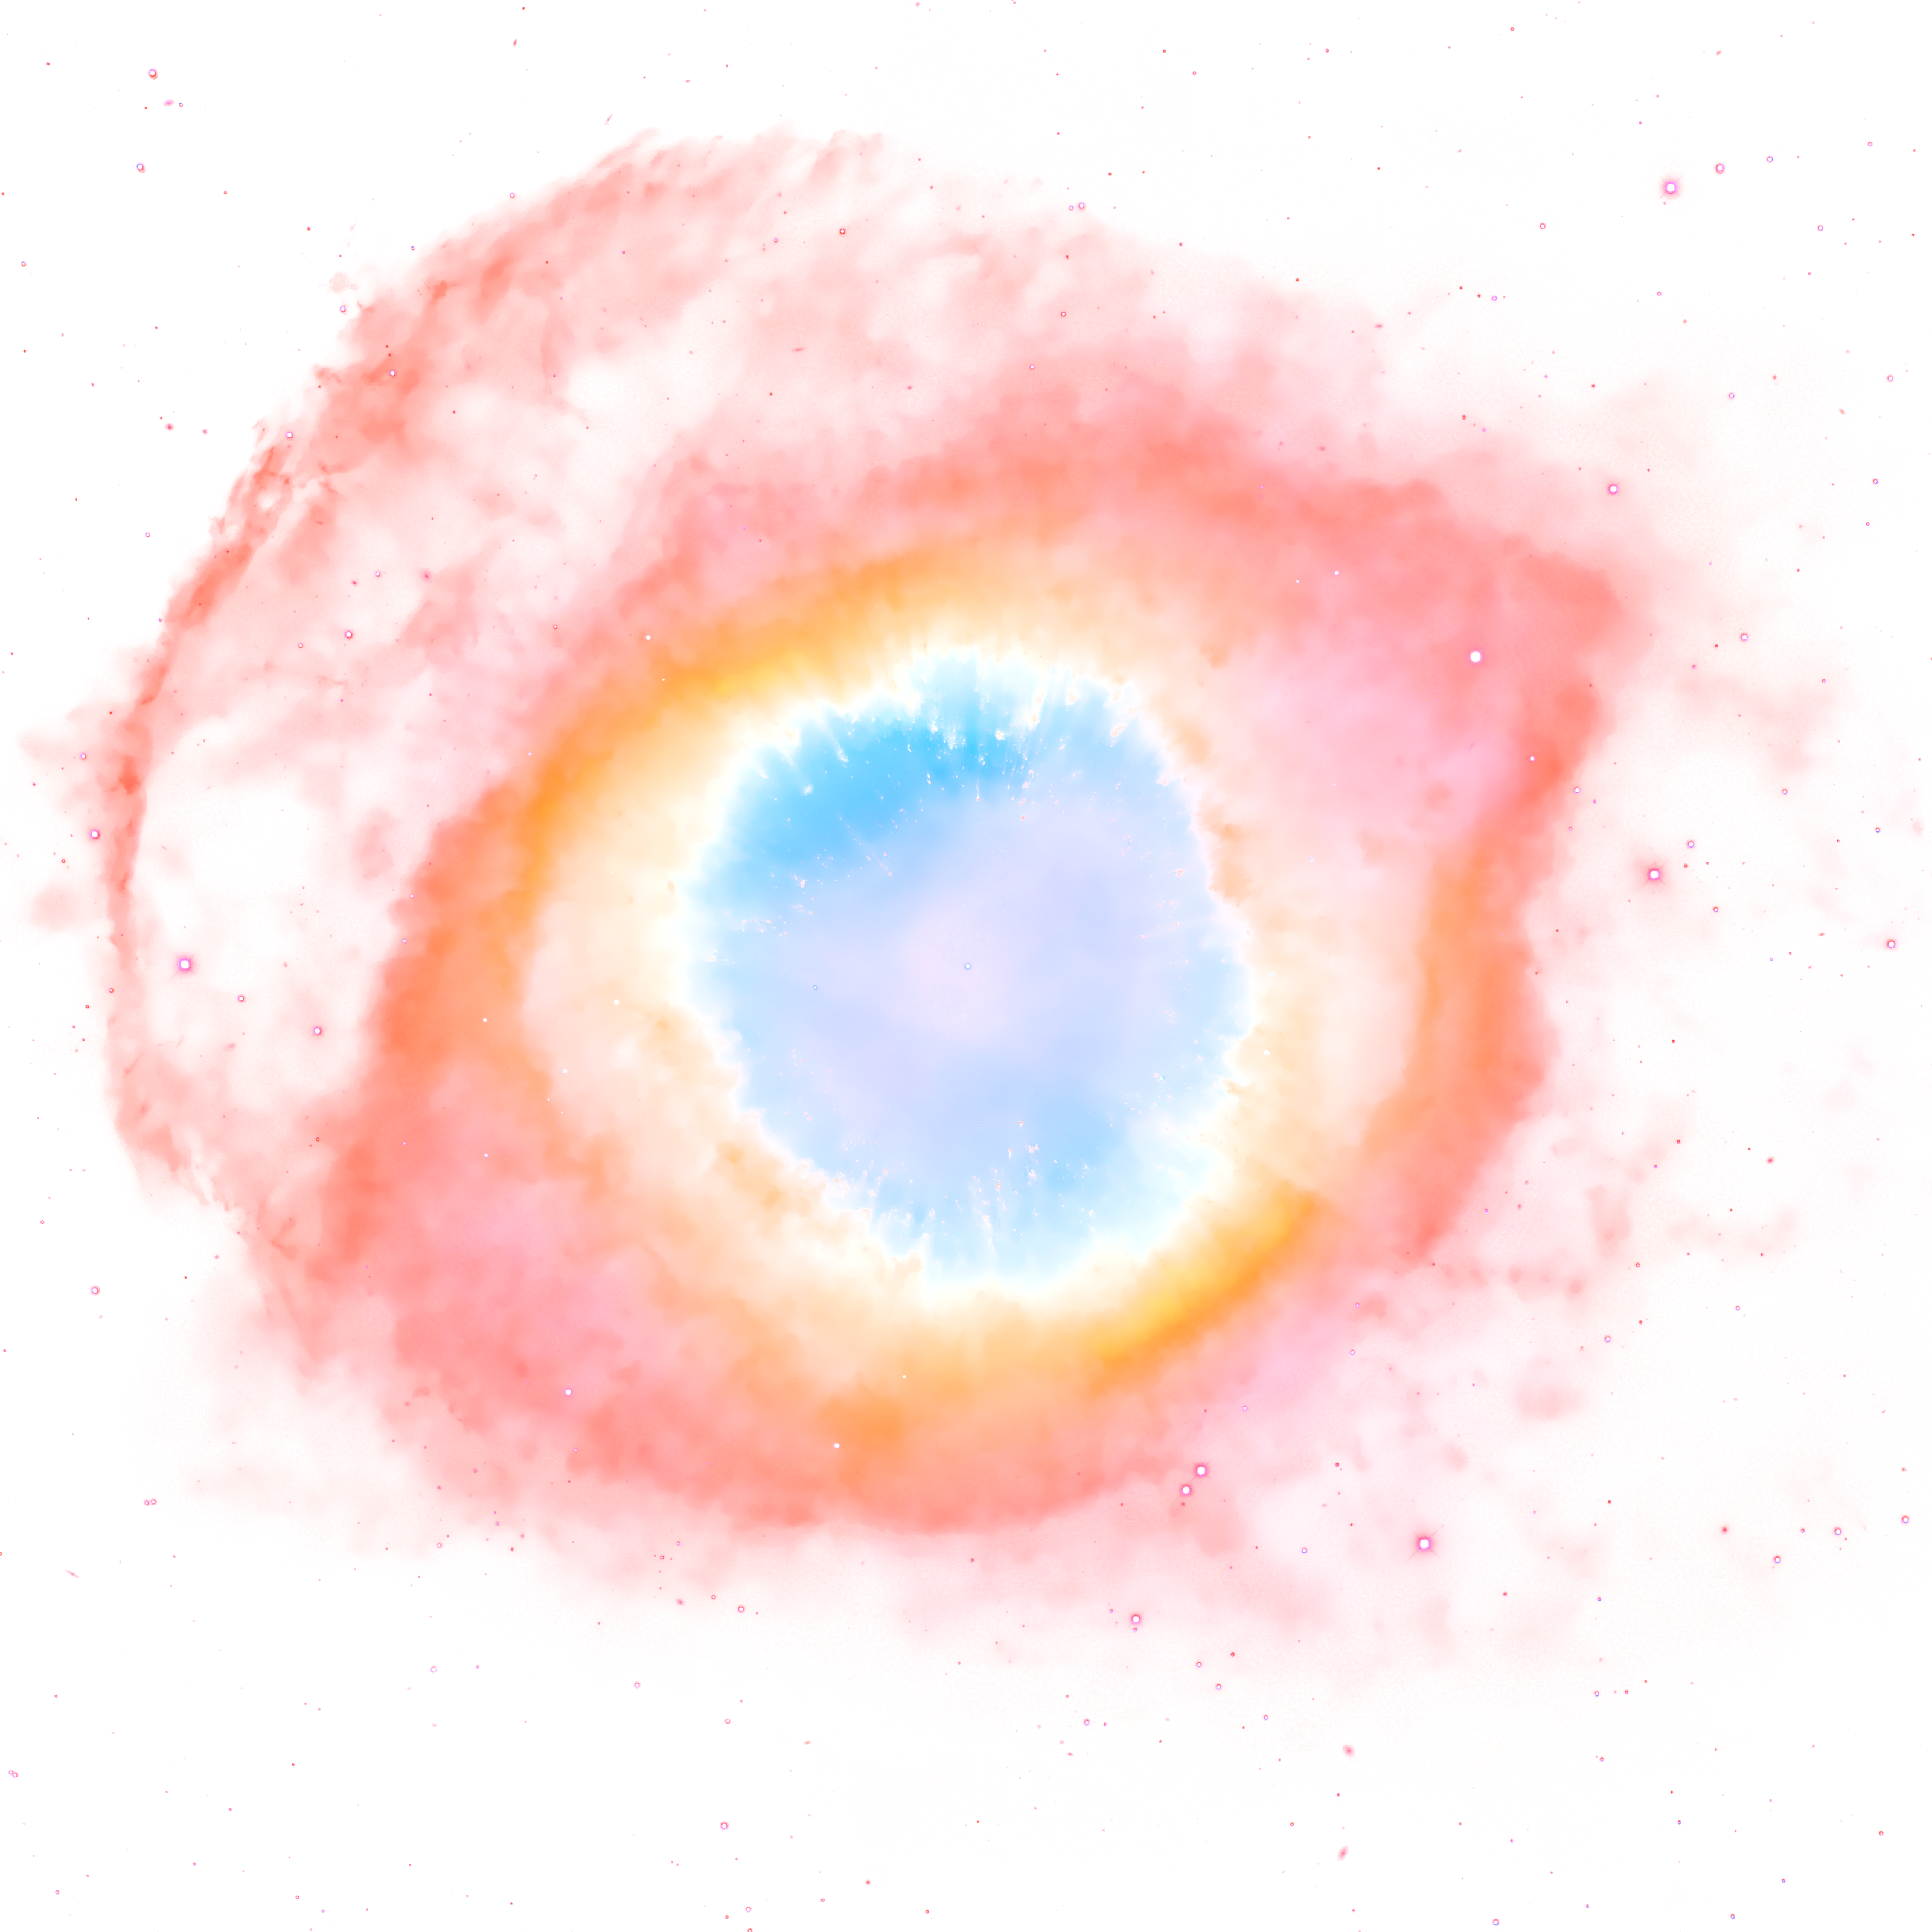 Nebula Png & Free Nebula.png Transparent Images #30651.